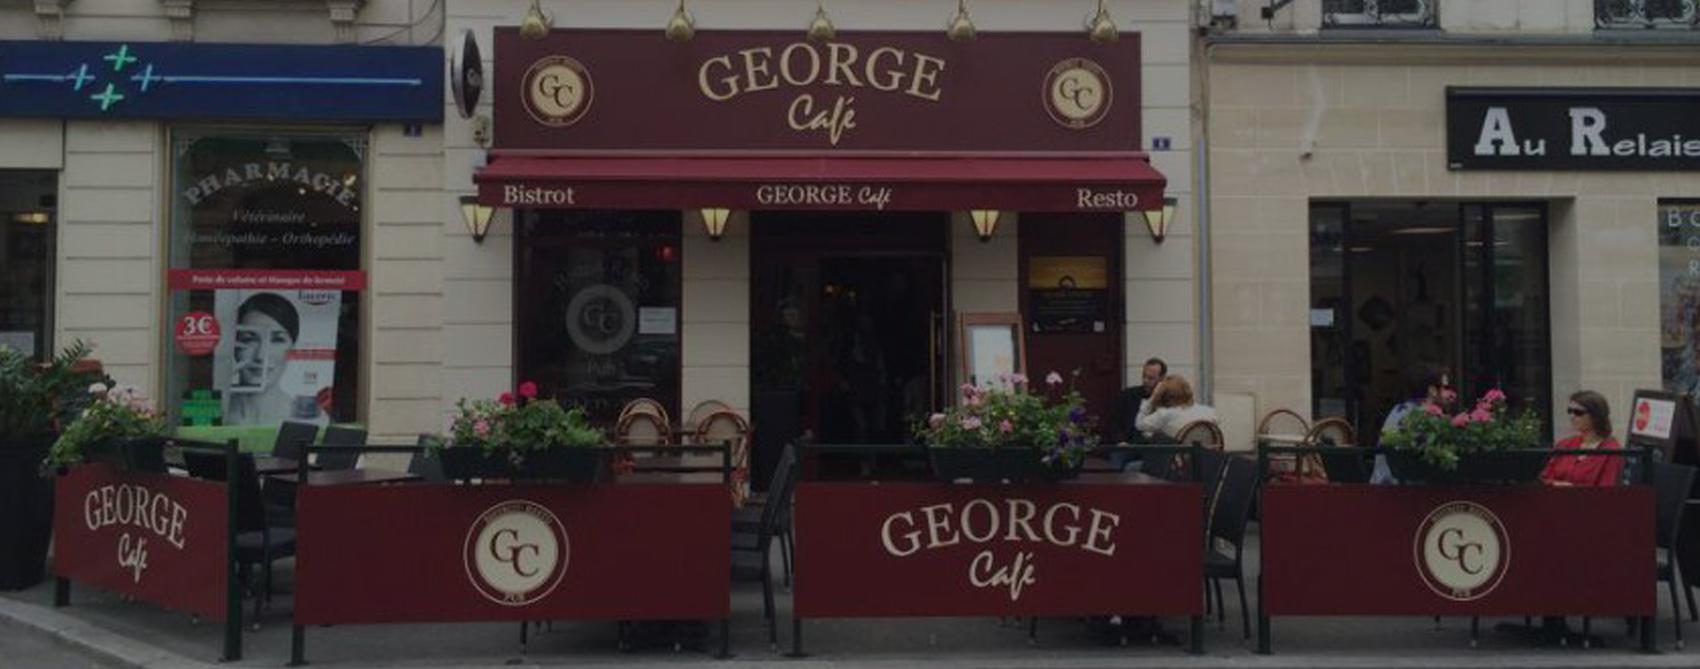 Façade du restaurant brasserie George Café 